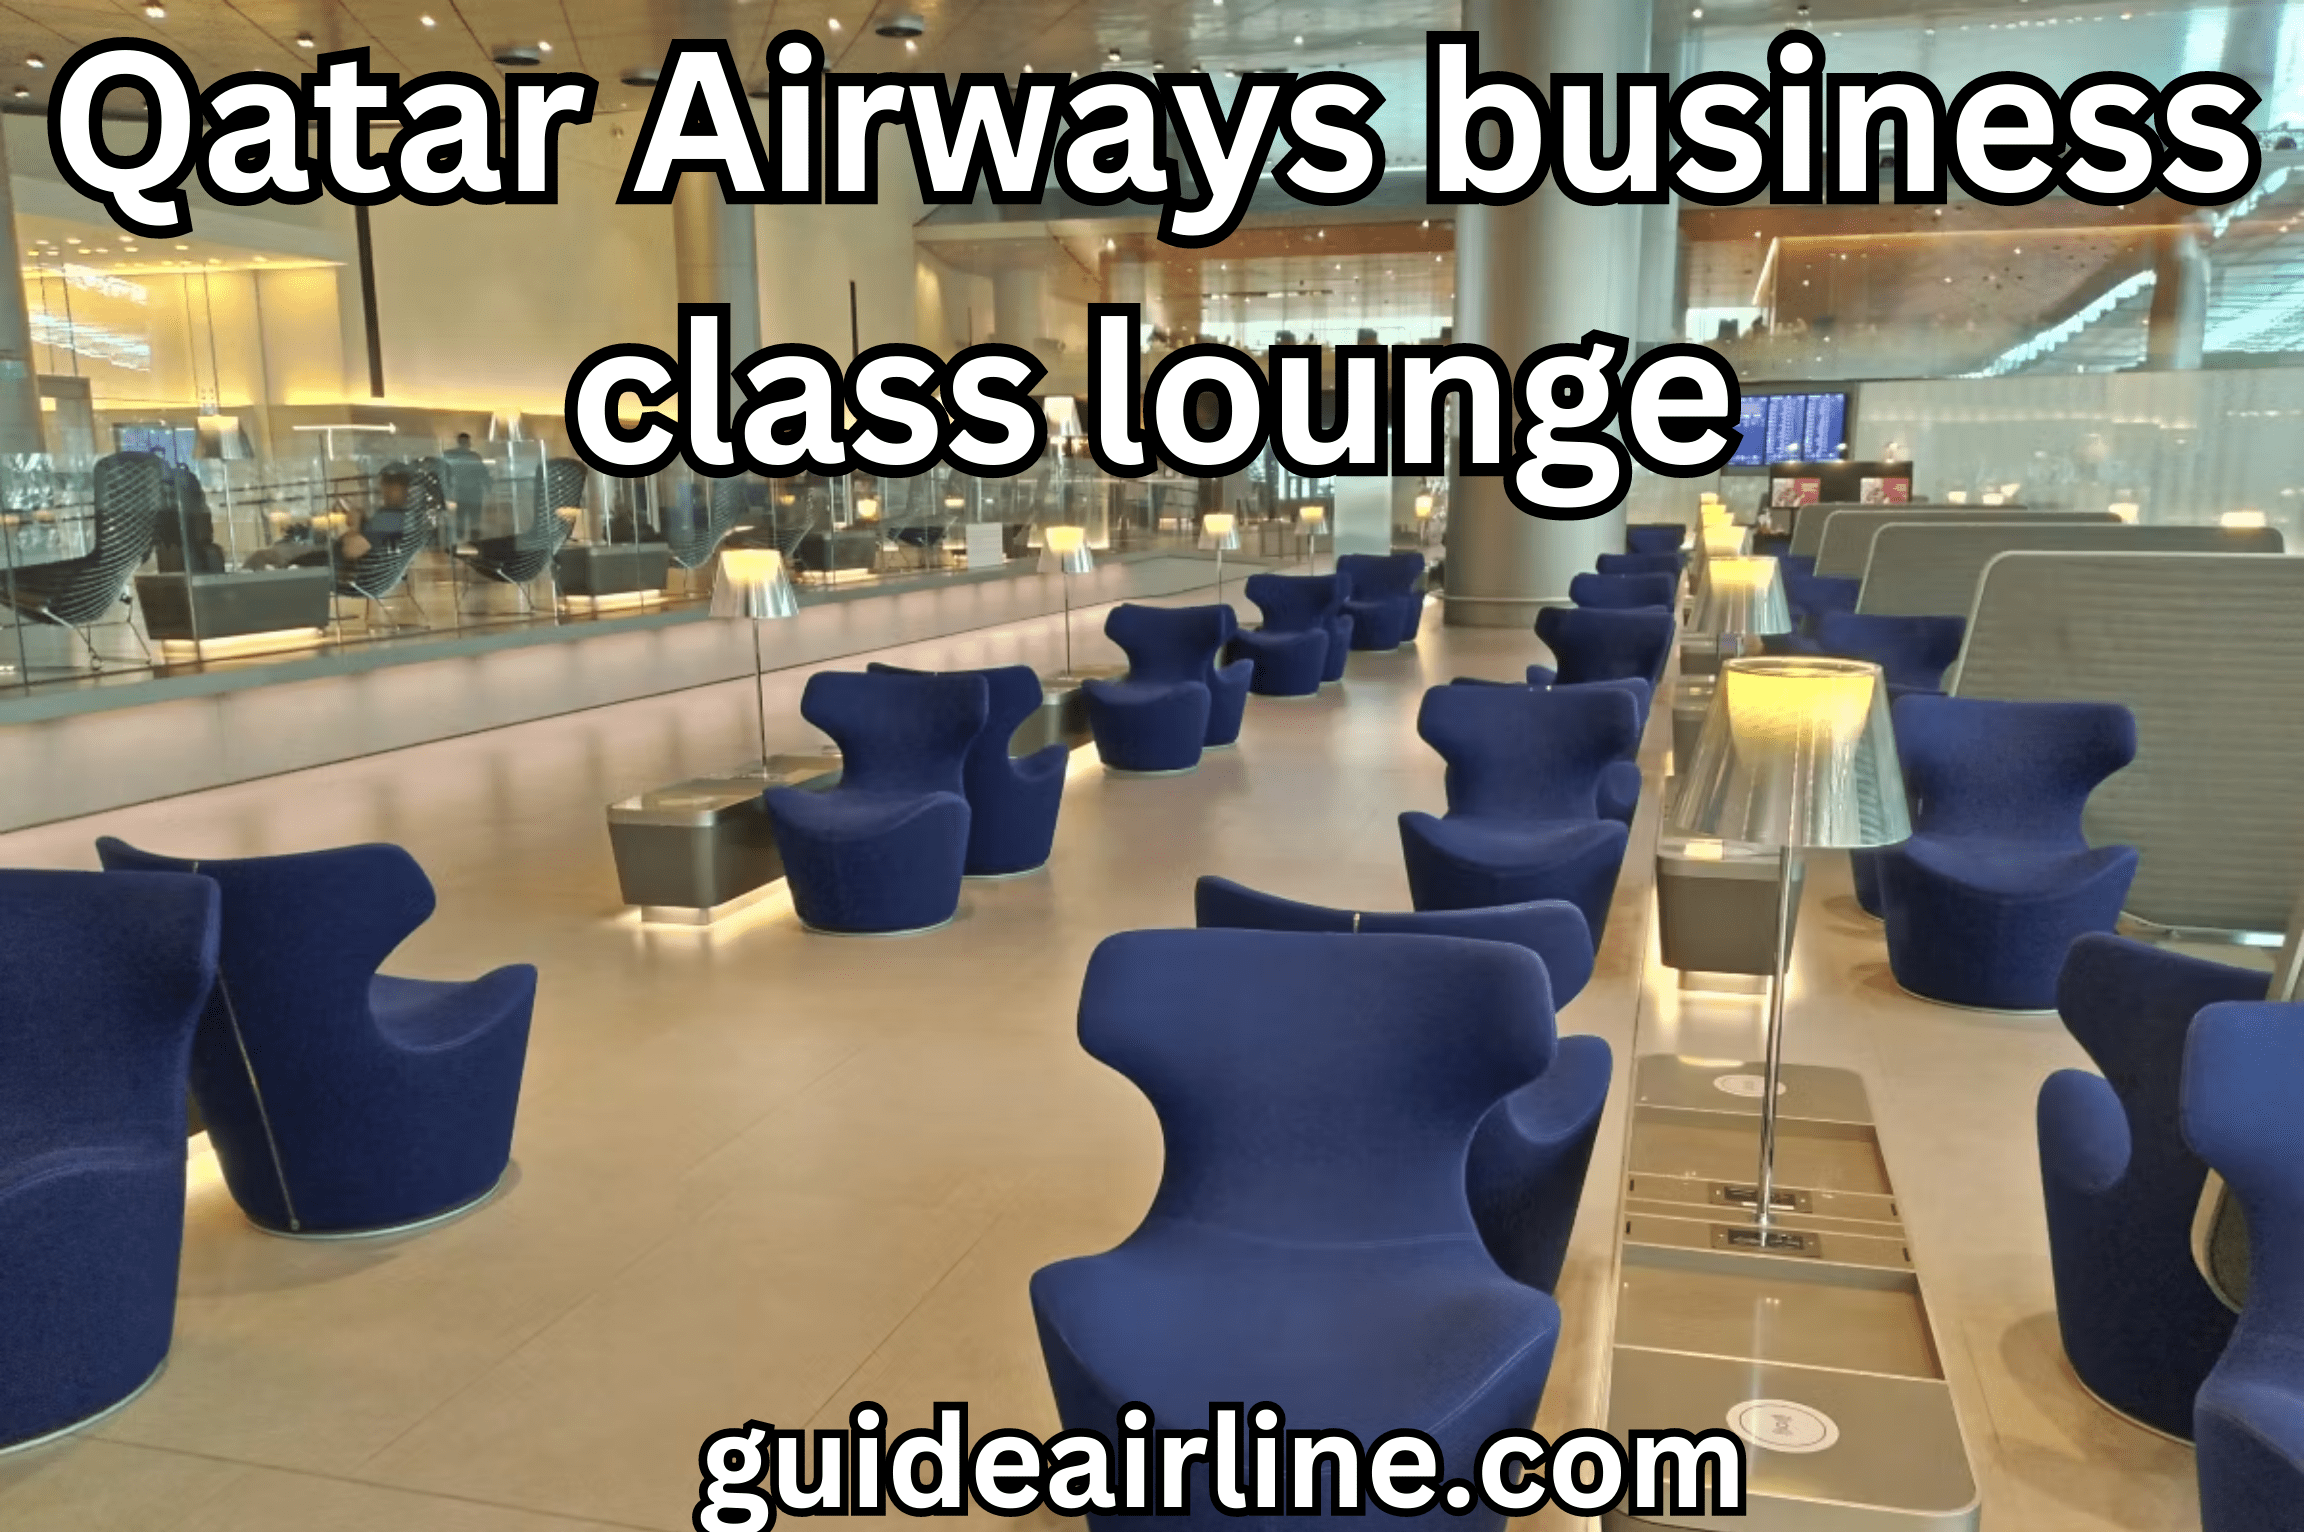 Qatar Airways business class lounge